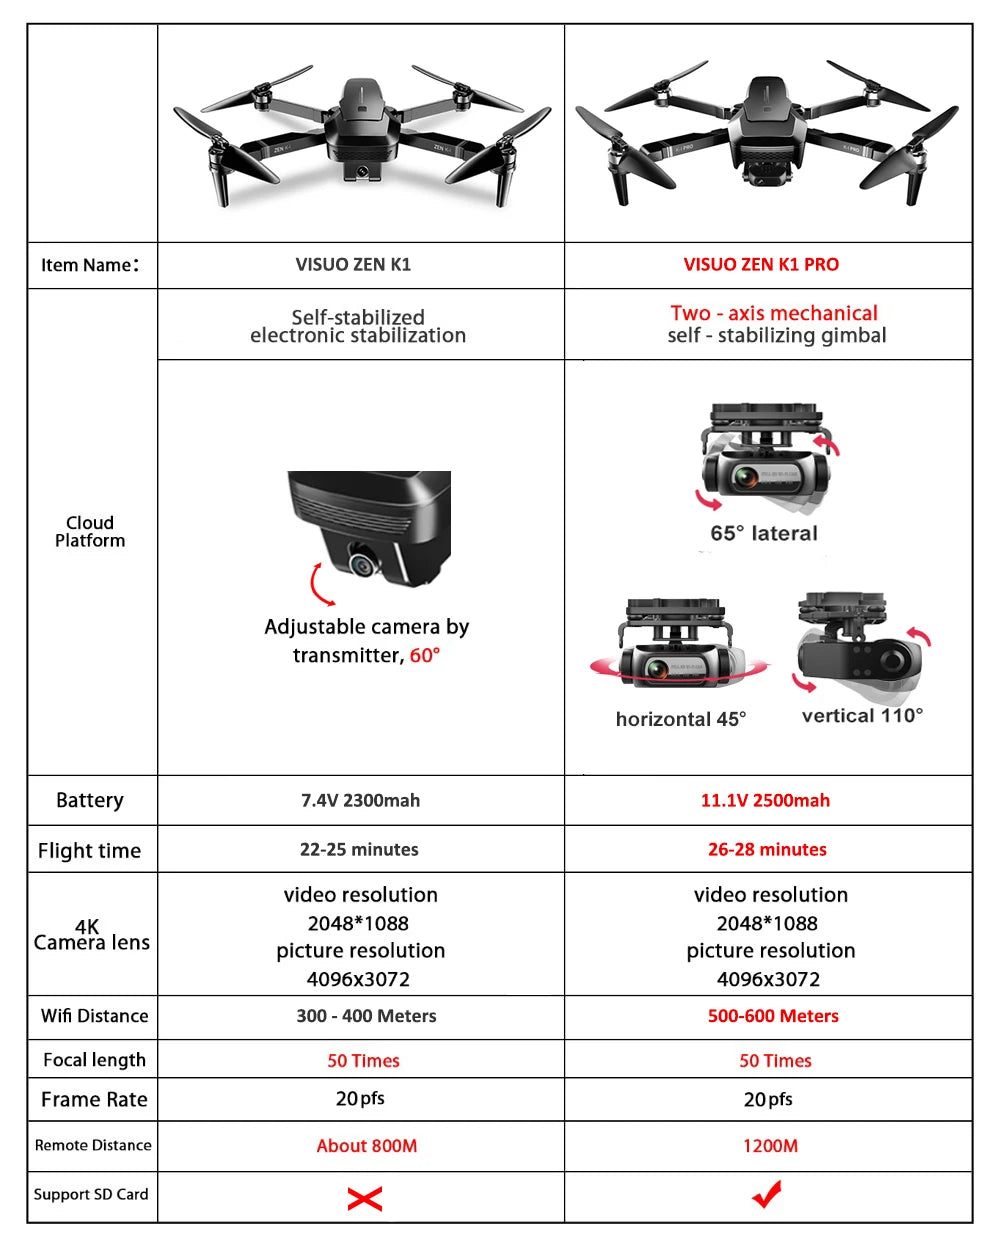 VISUO ZEN K1 PRO Drone, VISUO ZEN K1 PRO Two axis mechanical electronic Sonictabilzeation